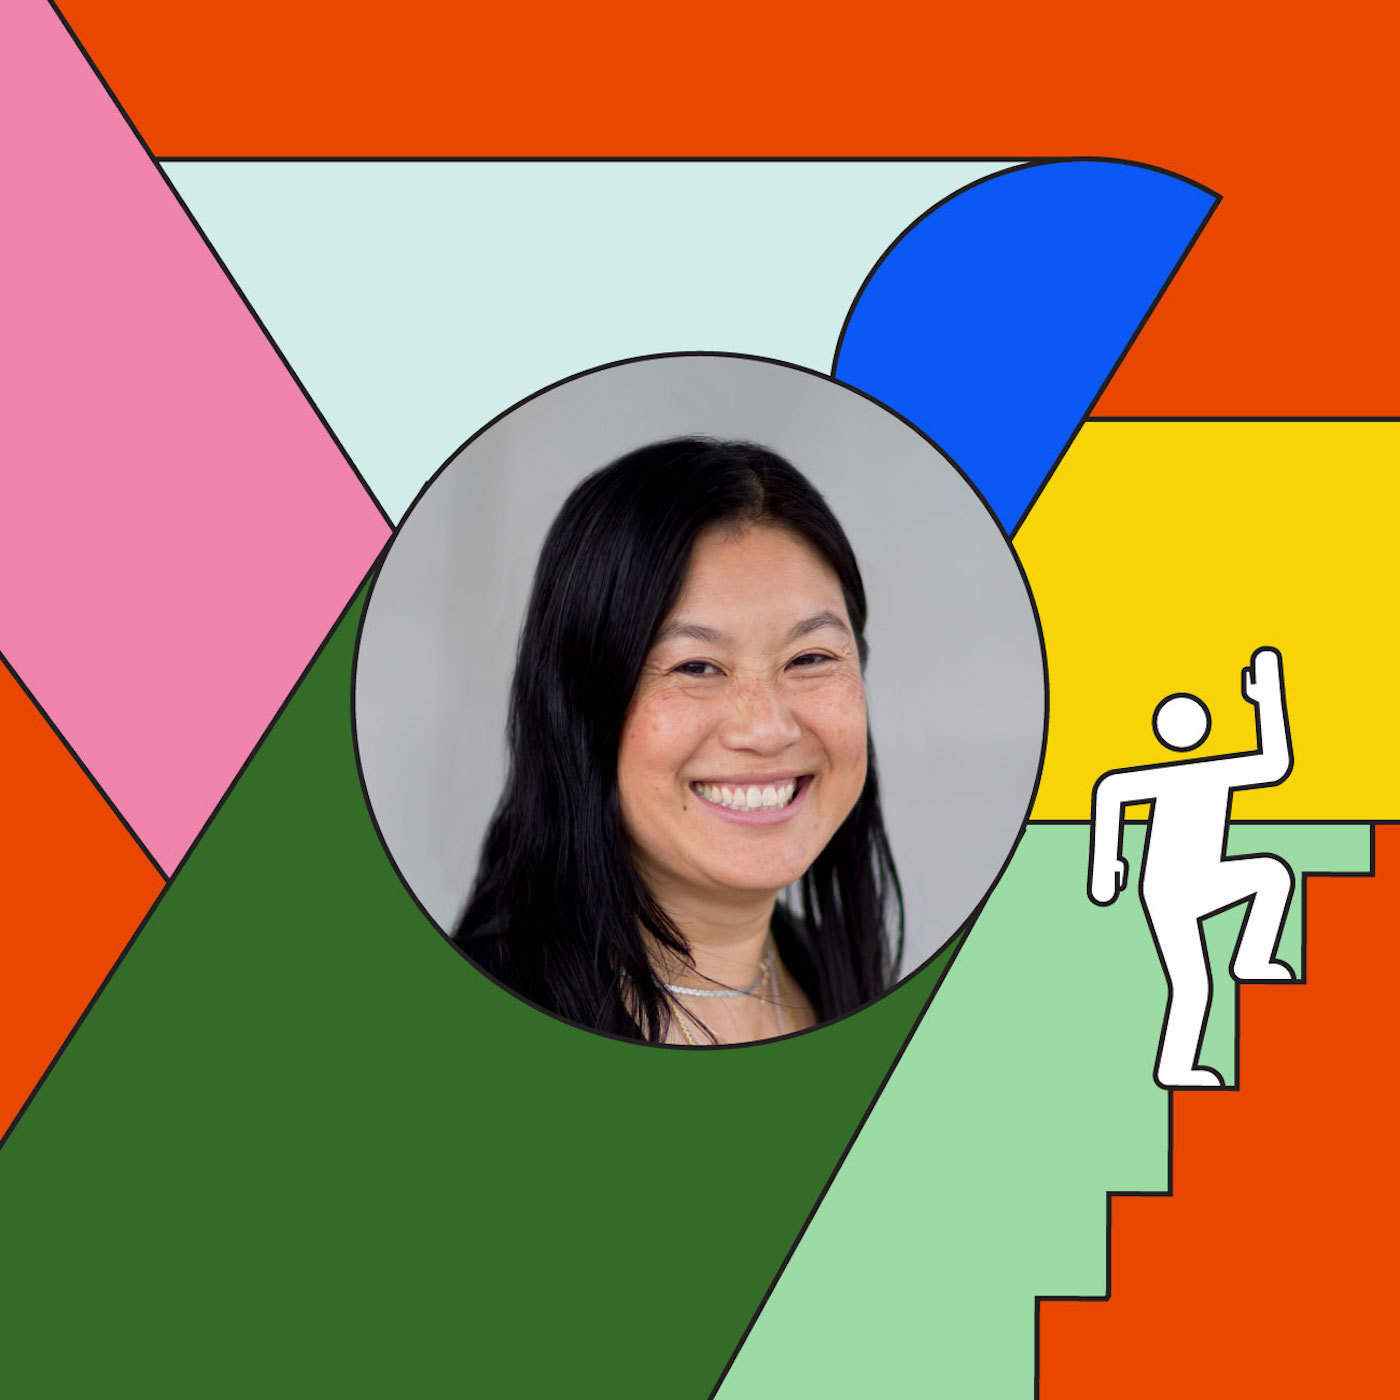 Lili Cheng, VP of AI and Research at Microsoft